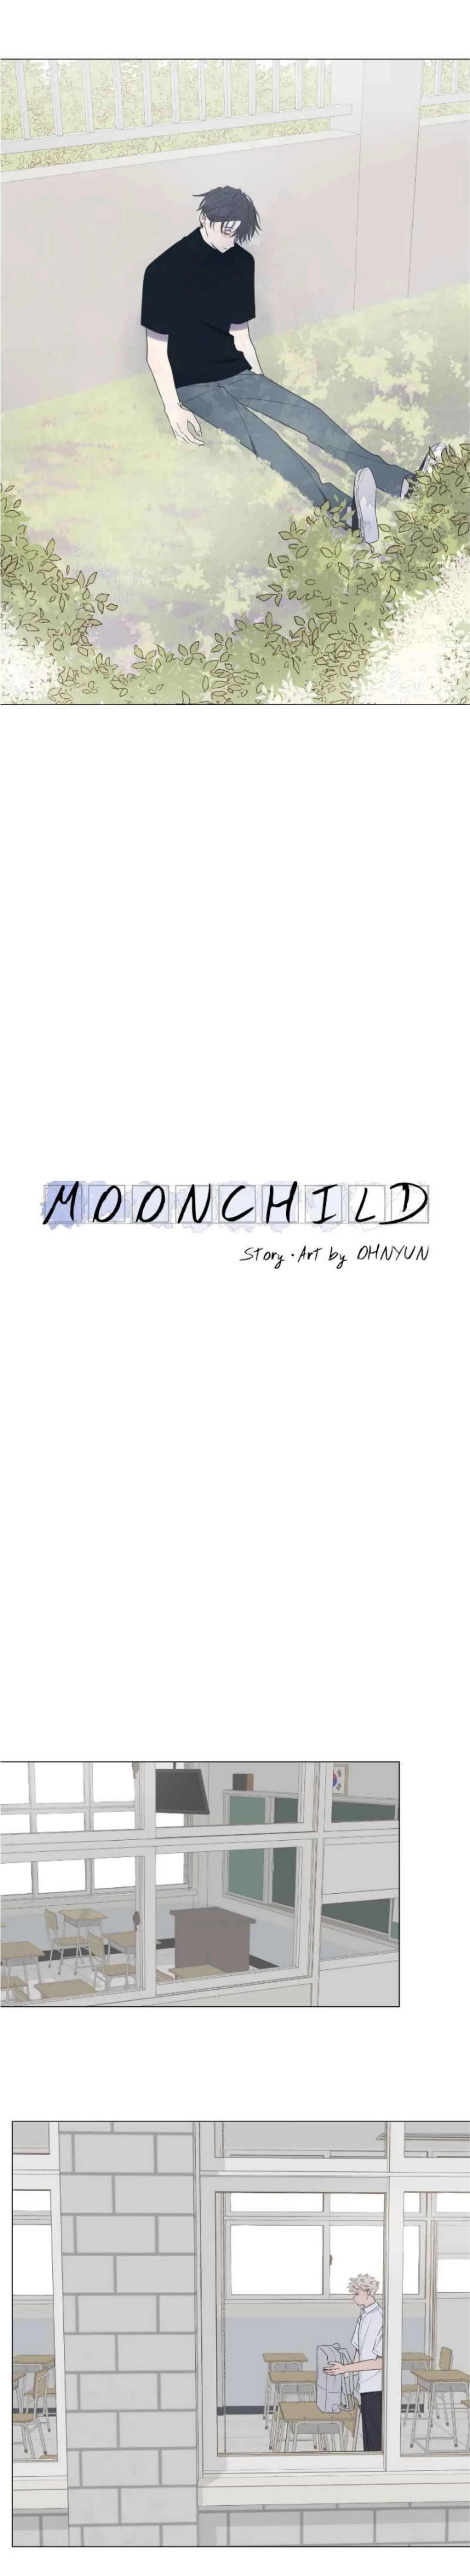 moonchild-chap-25-7